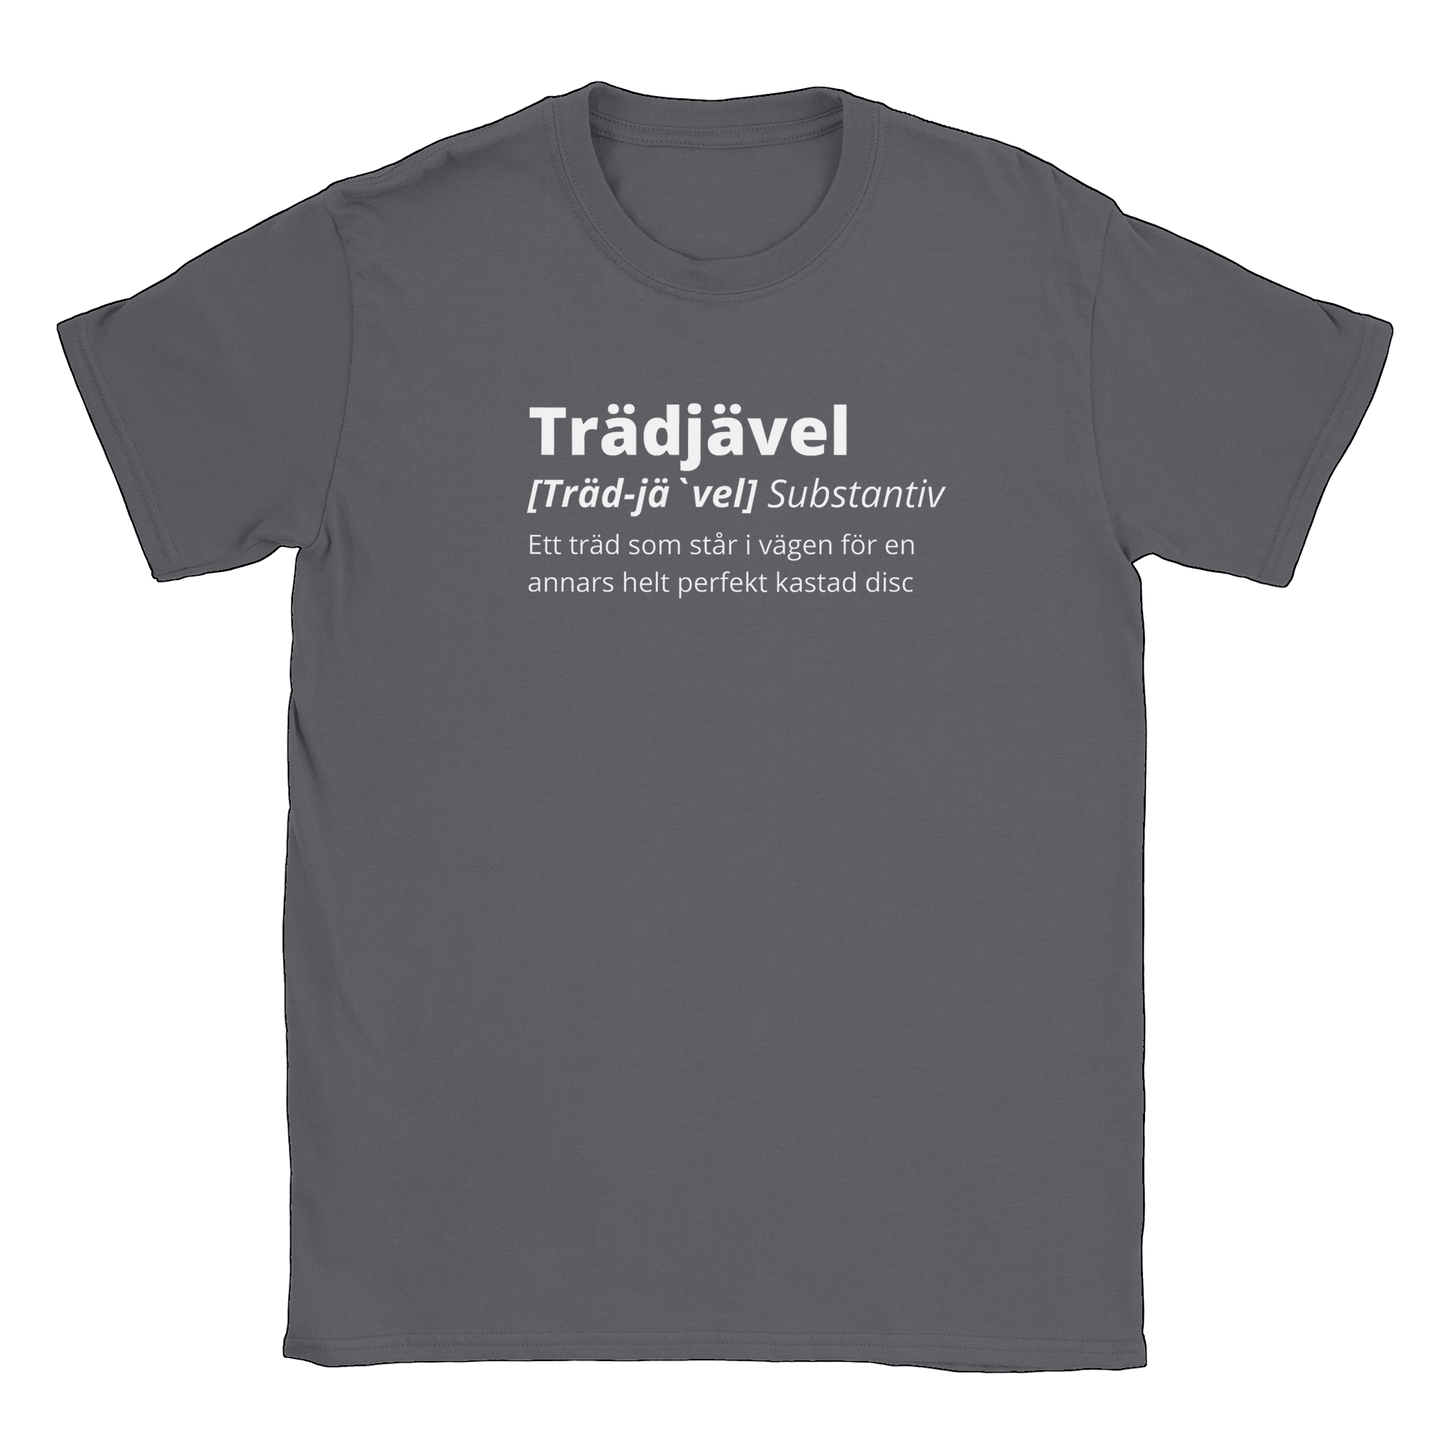 Trädjävel Discgolf - T-shirt Charcoal